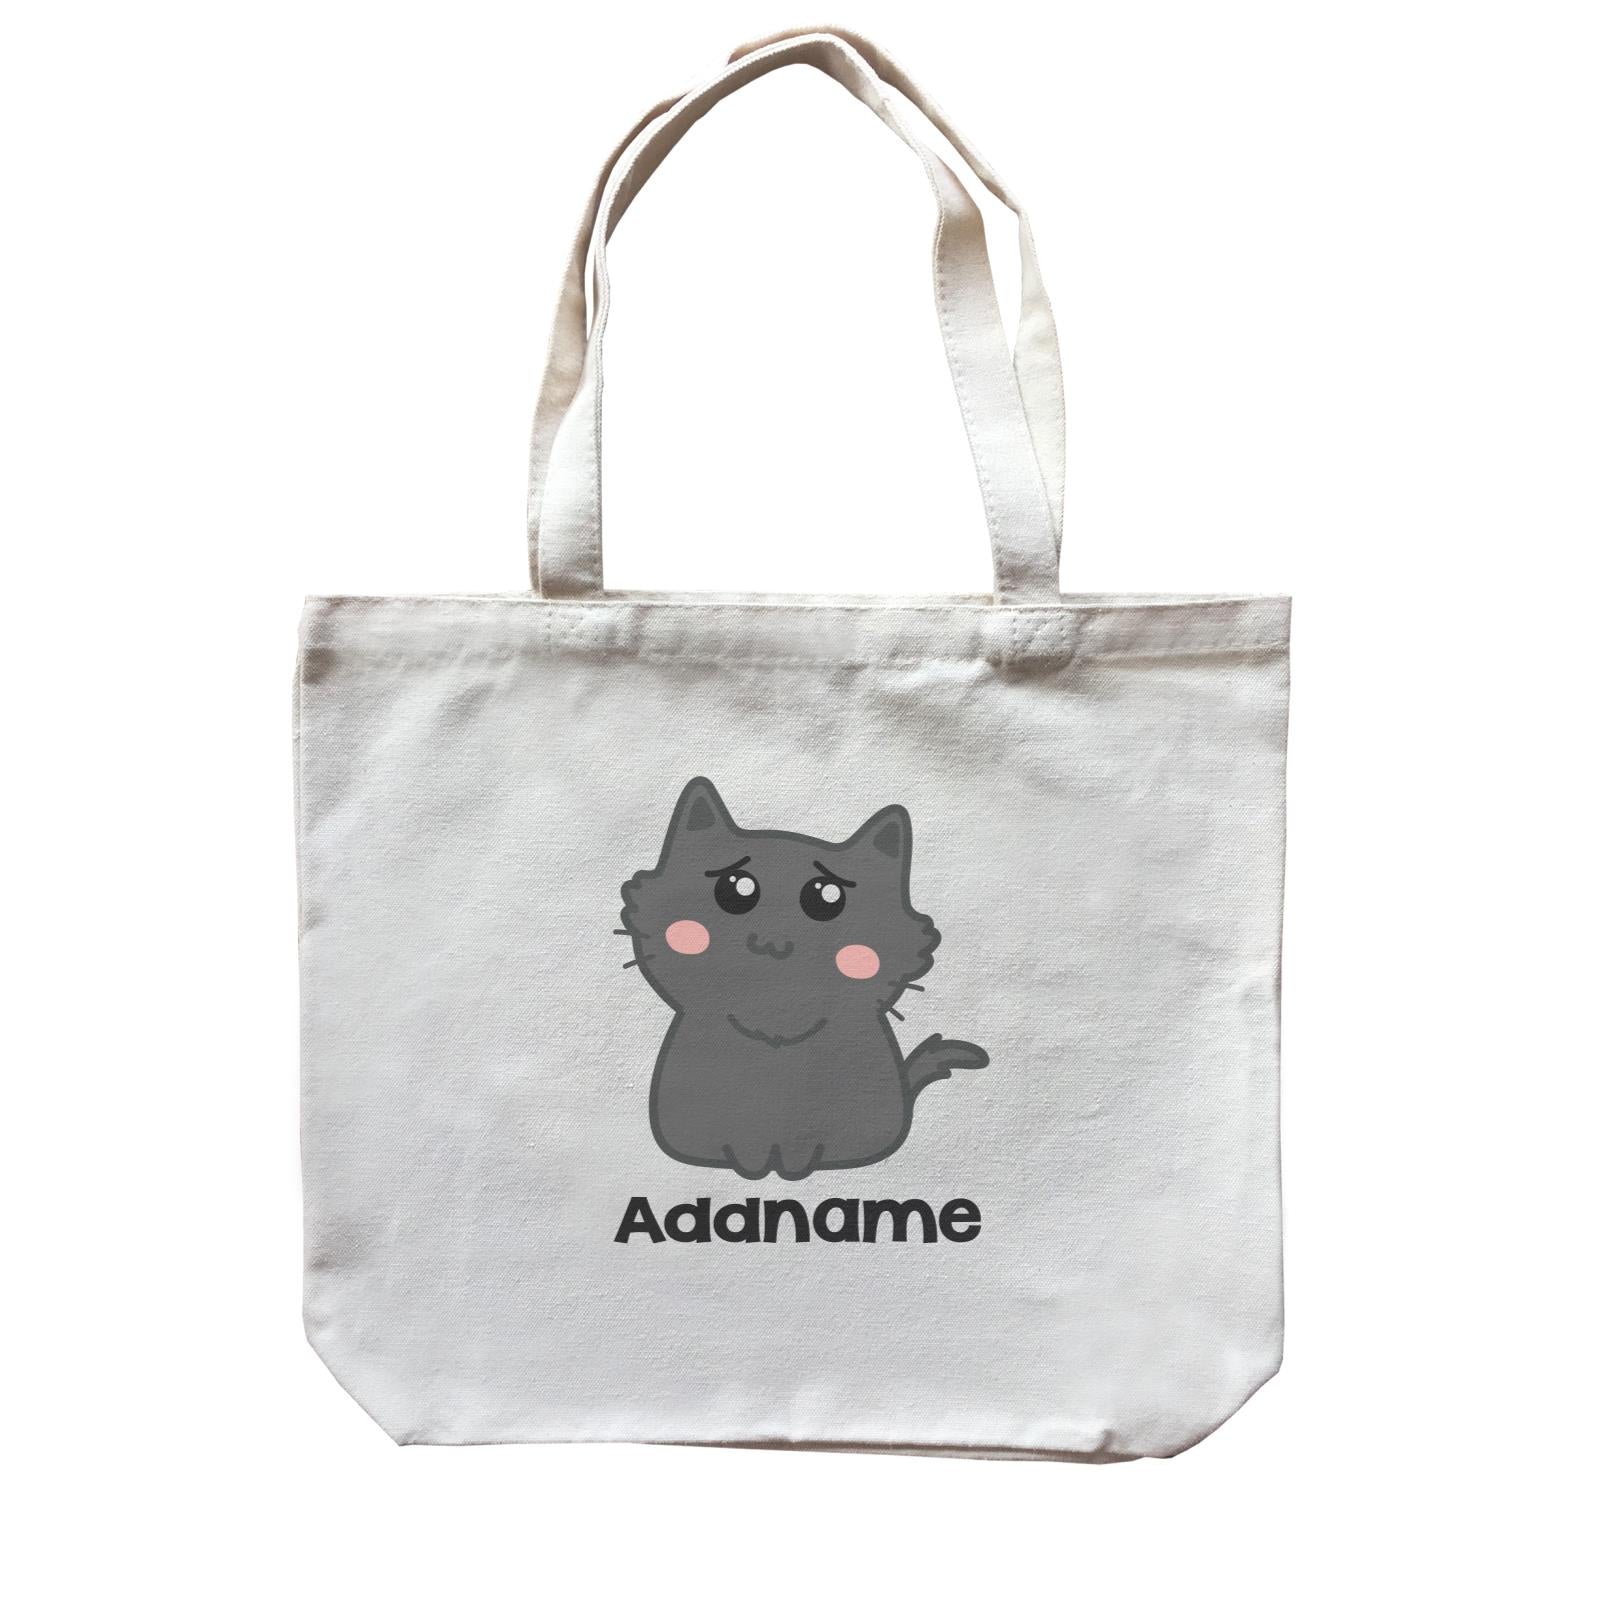 Drawn Adorable Cats Dark Grey Addname Canvas Bag